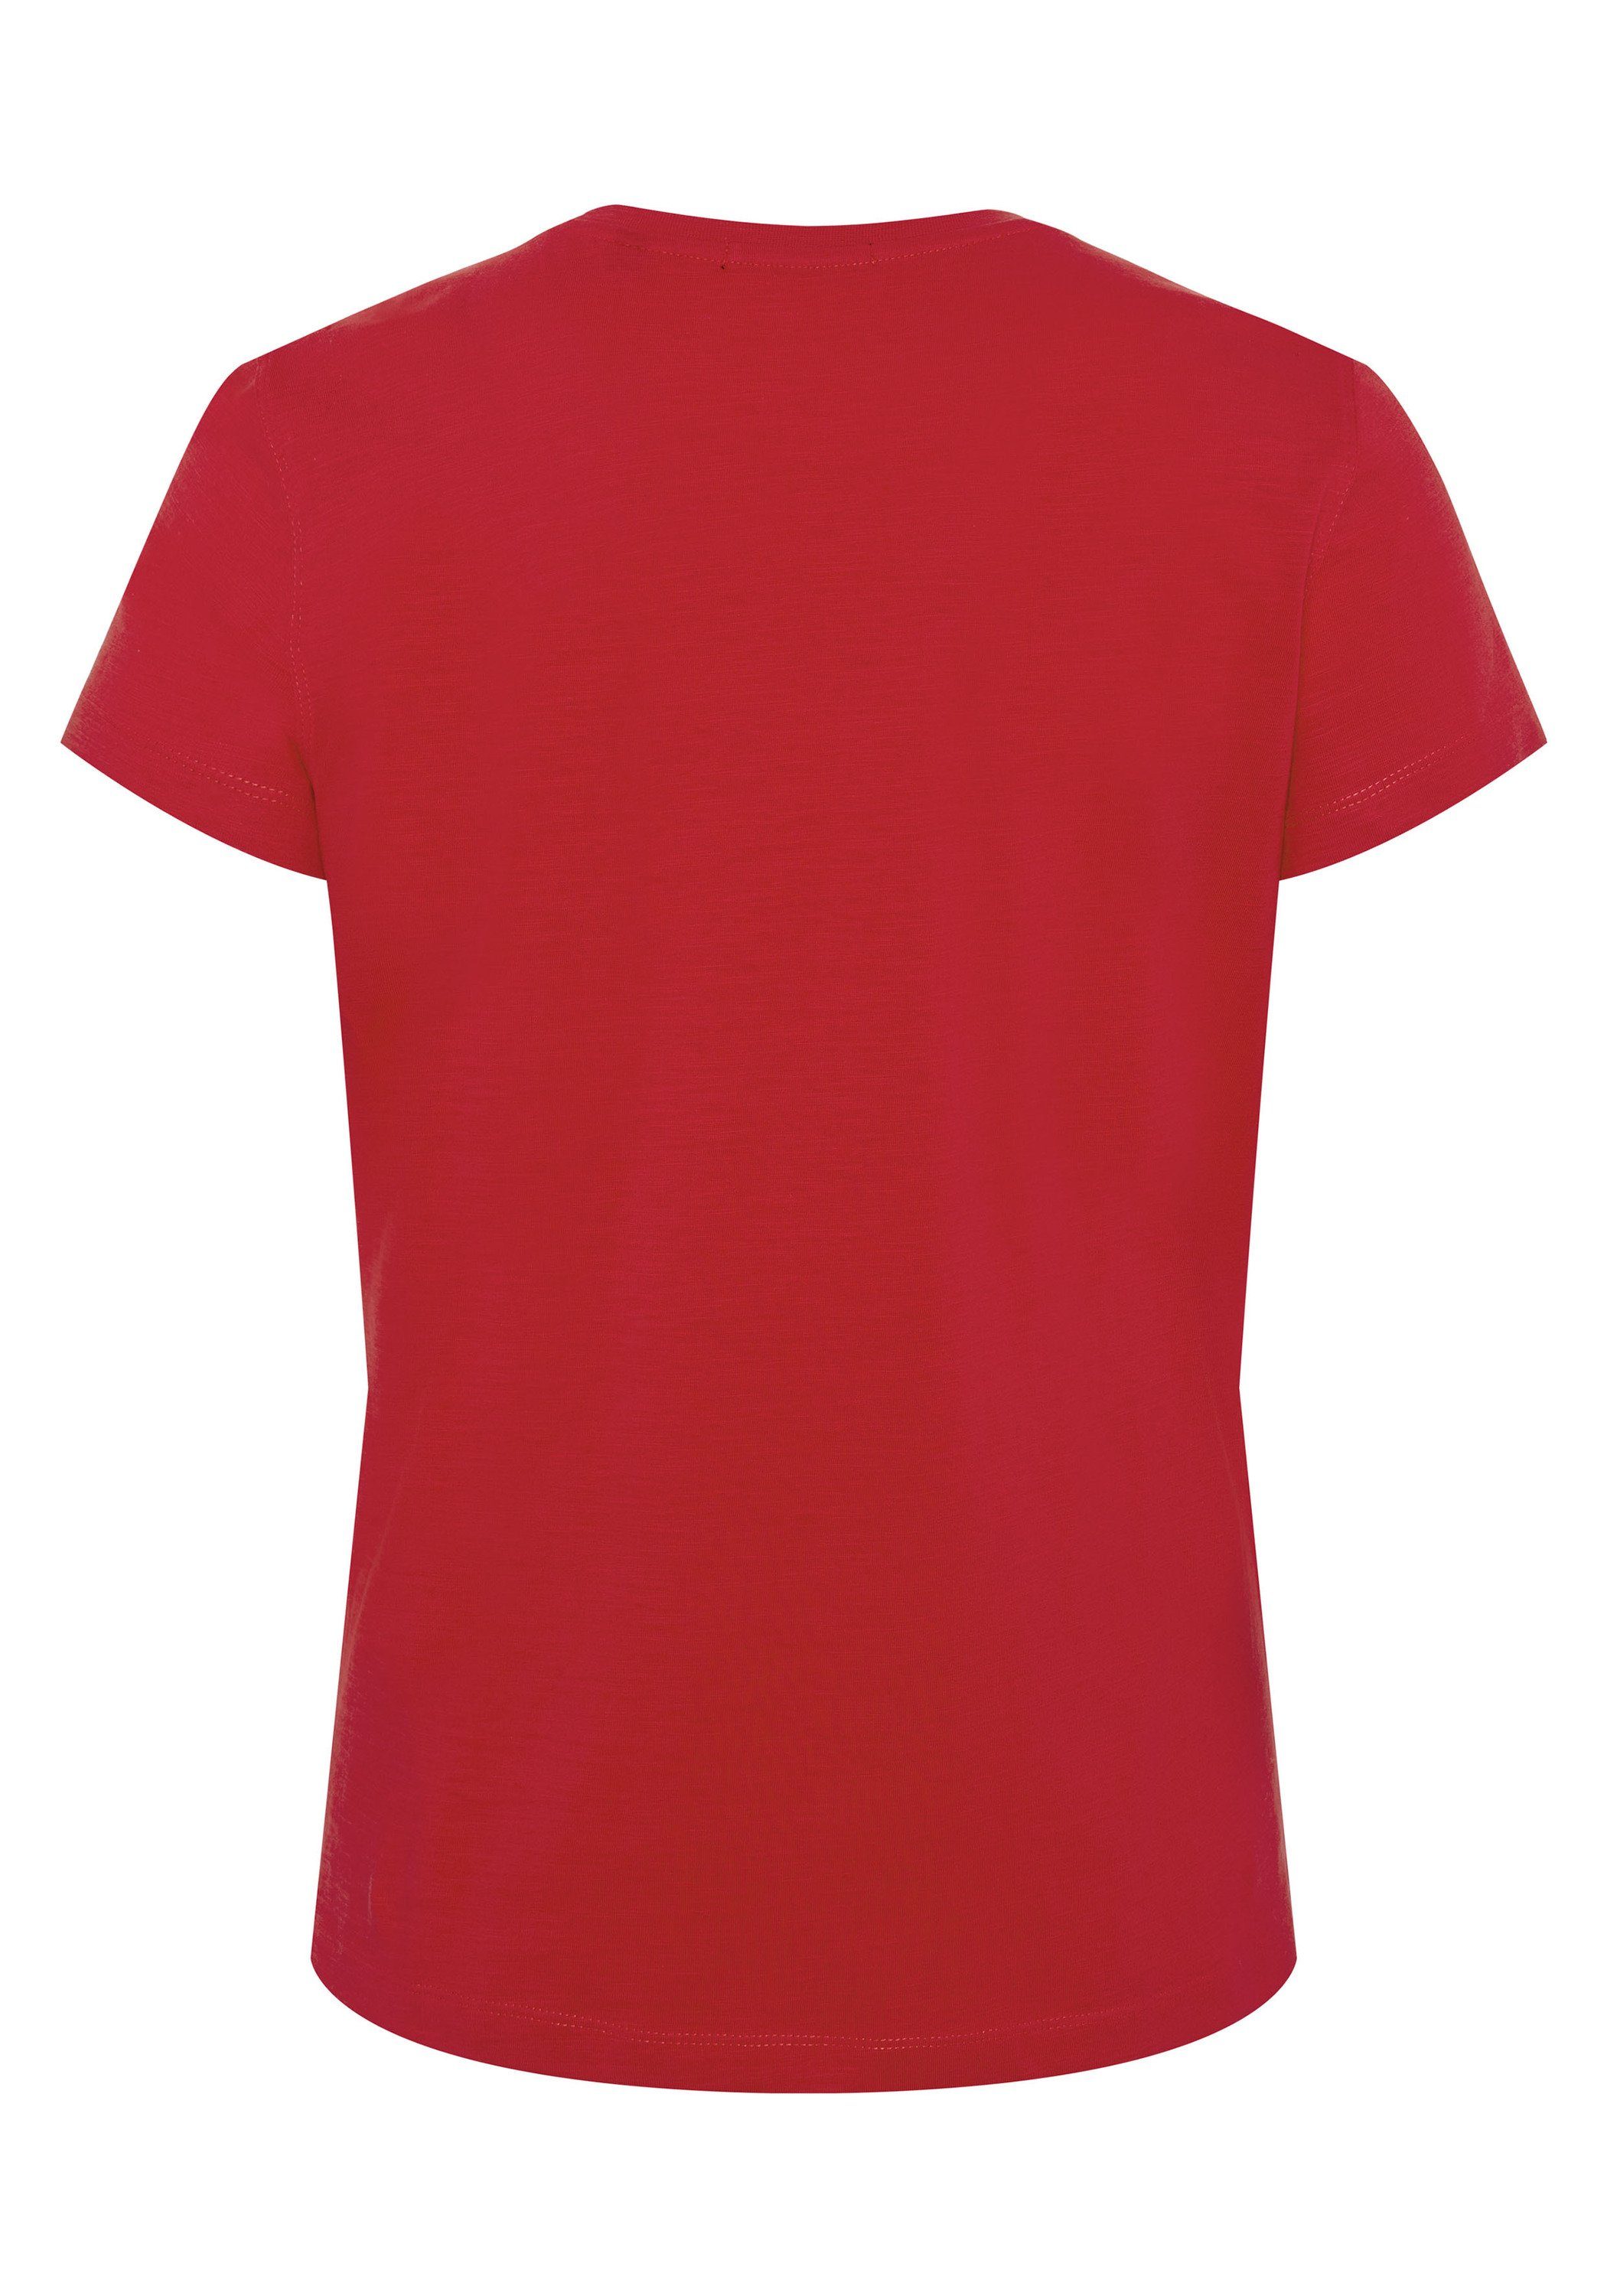 Farbverlauf-Optik T-Shirt 1 Logo mit Toreador Chiemsee Print-Shirt in